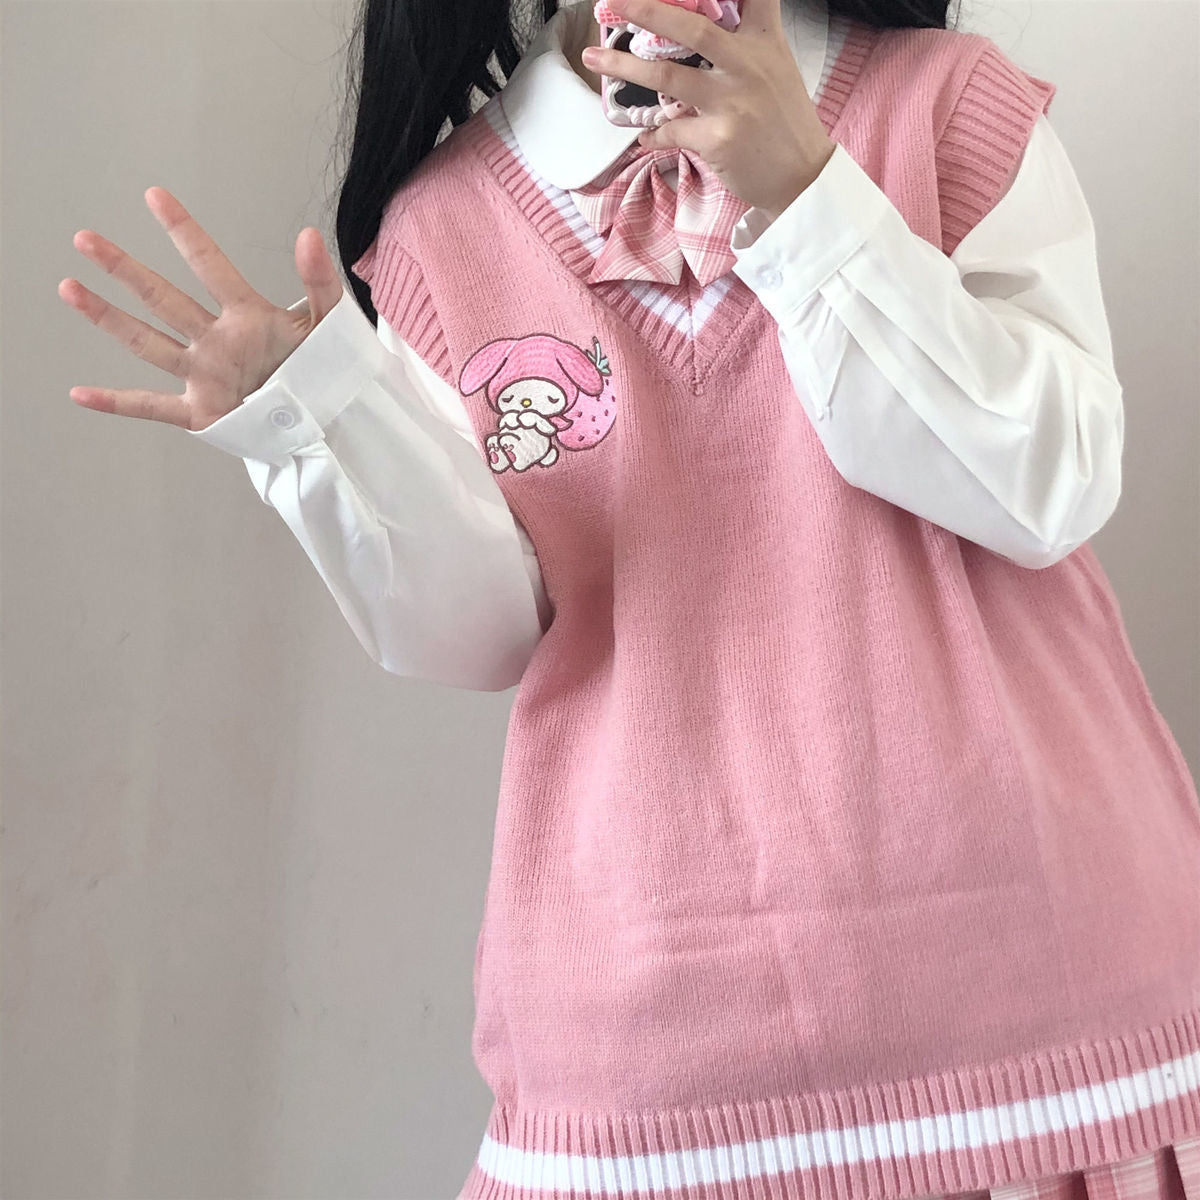 Kawaii Kuromi My Melody Cinnamoroll Sanrioes Wool Sweater V-Neck Waistcoat Vest College Lolita Girl Clothing Anime Peripherals, everythinganimee